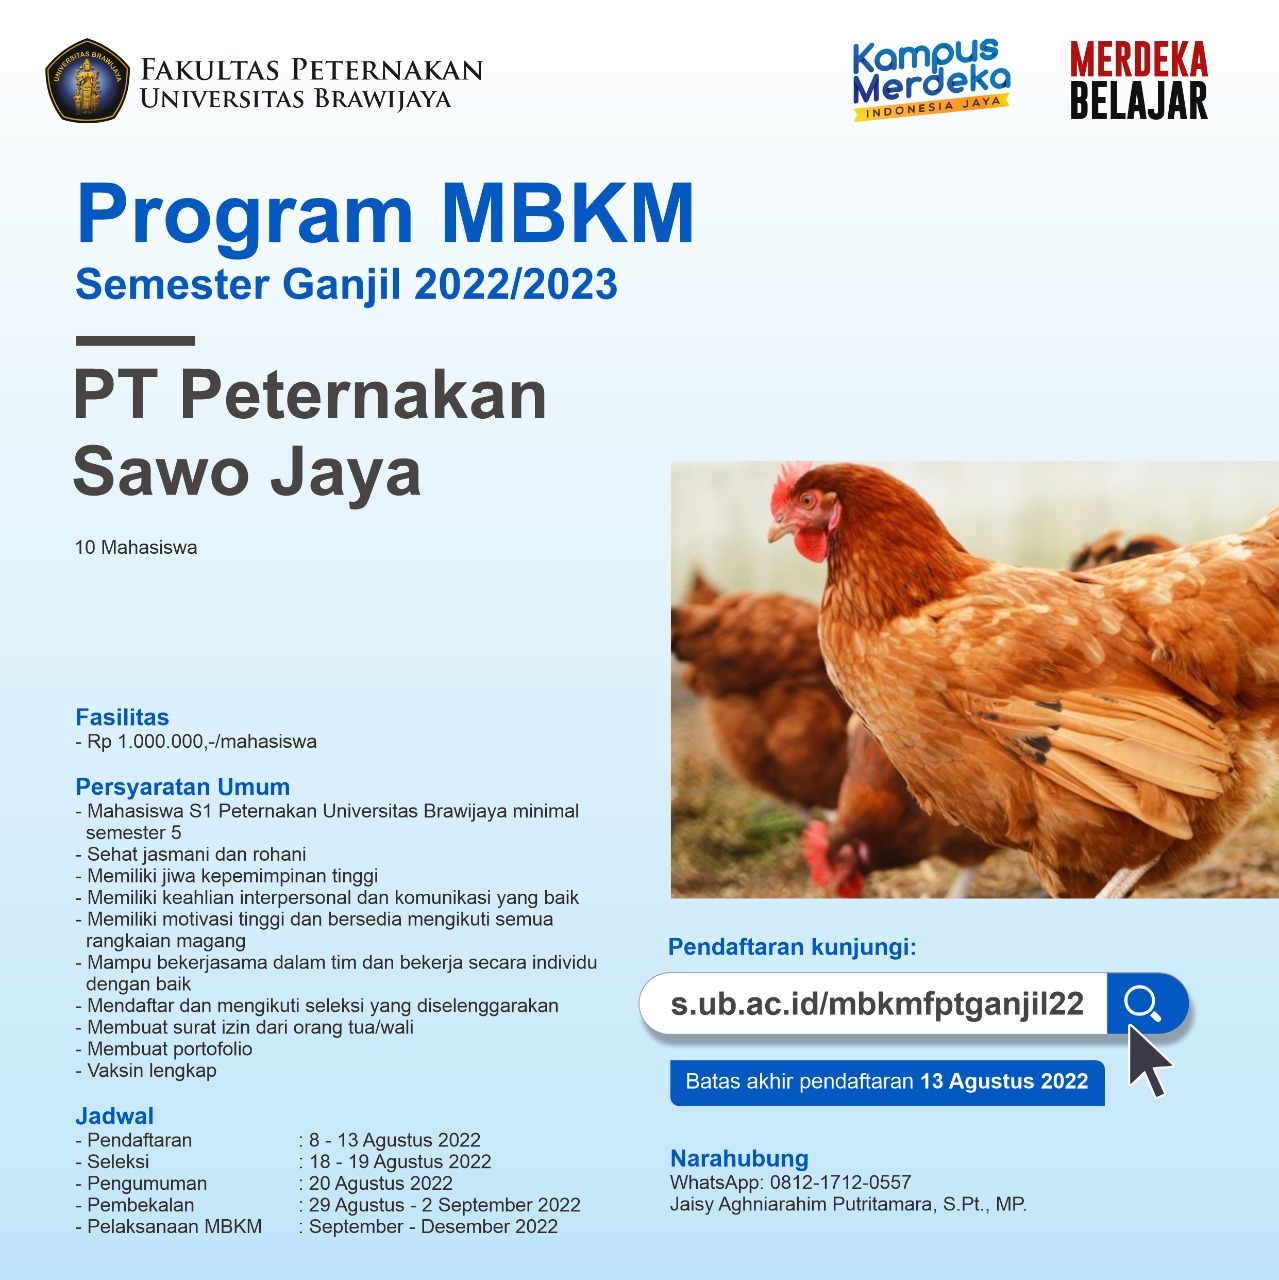 MBKM Program Odd Semester 2022/2023 PT. Peternakan Sawo Jaya